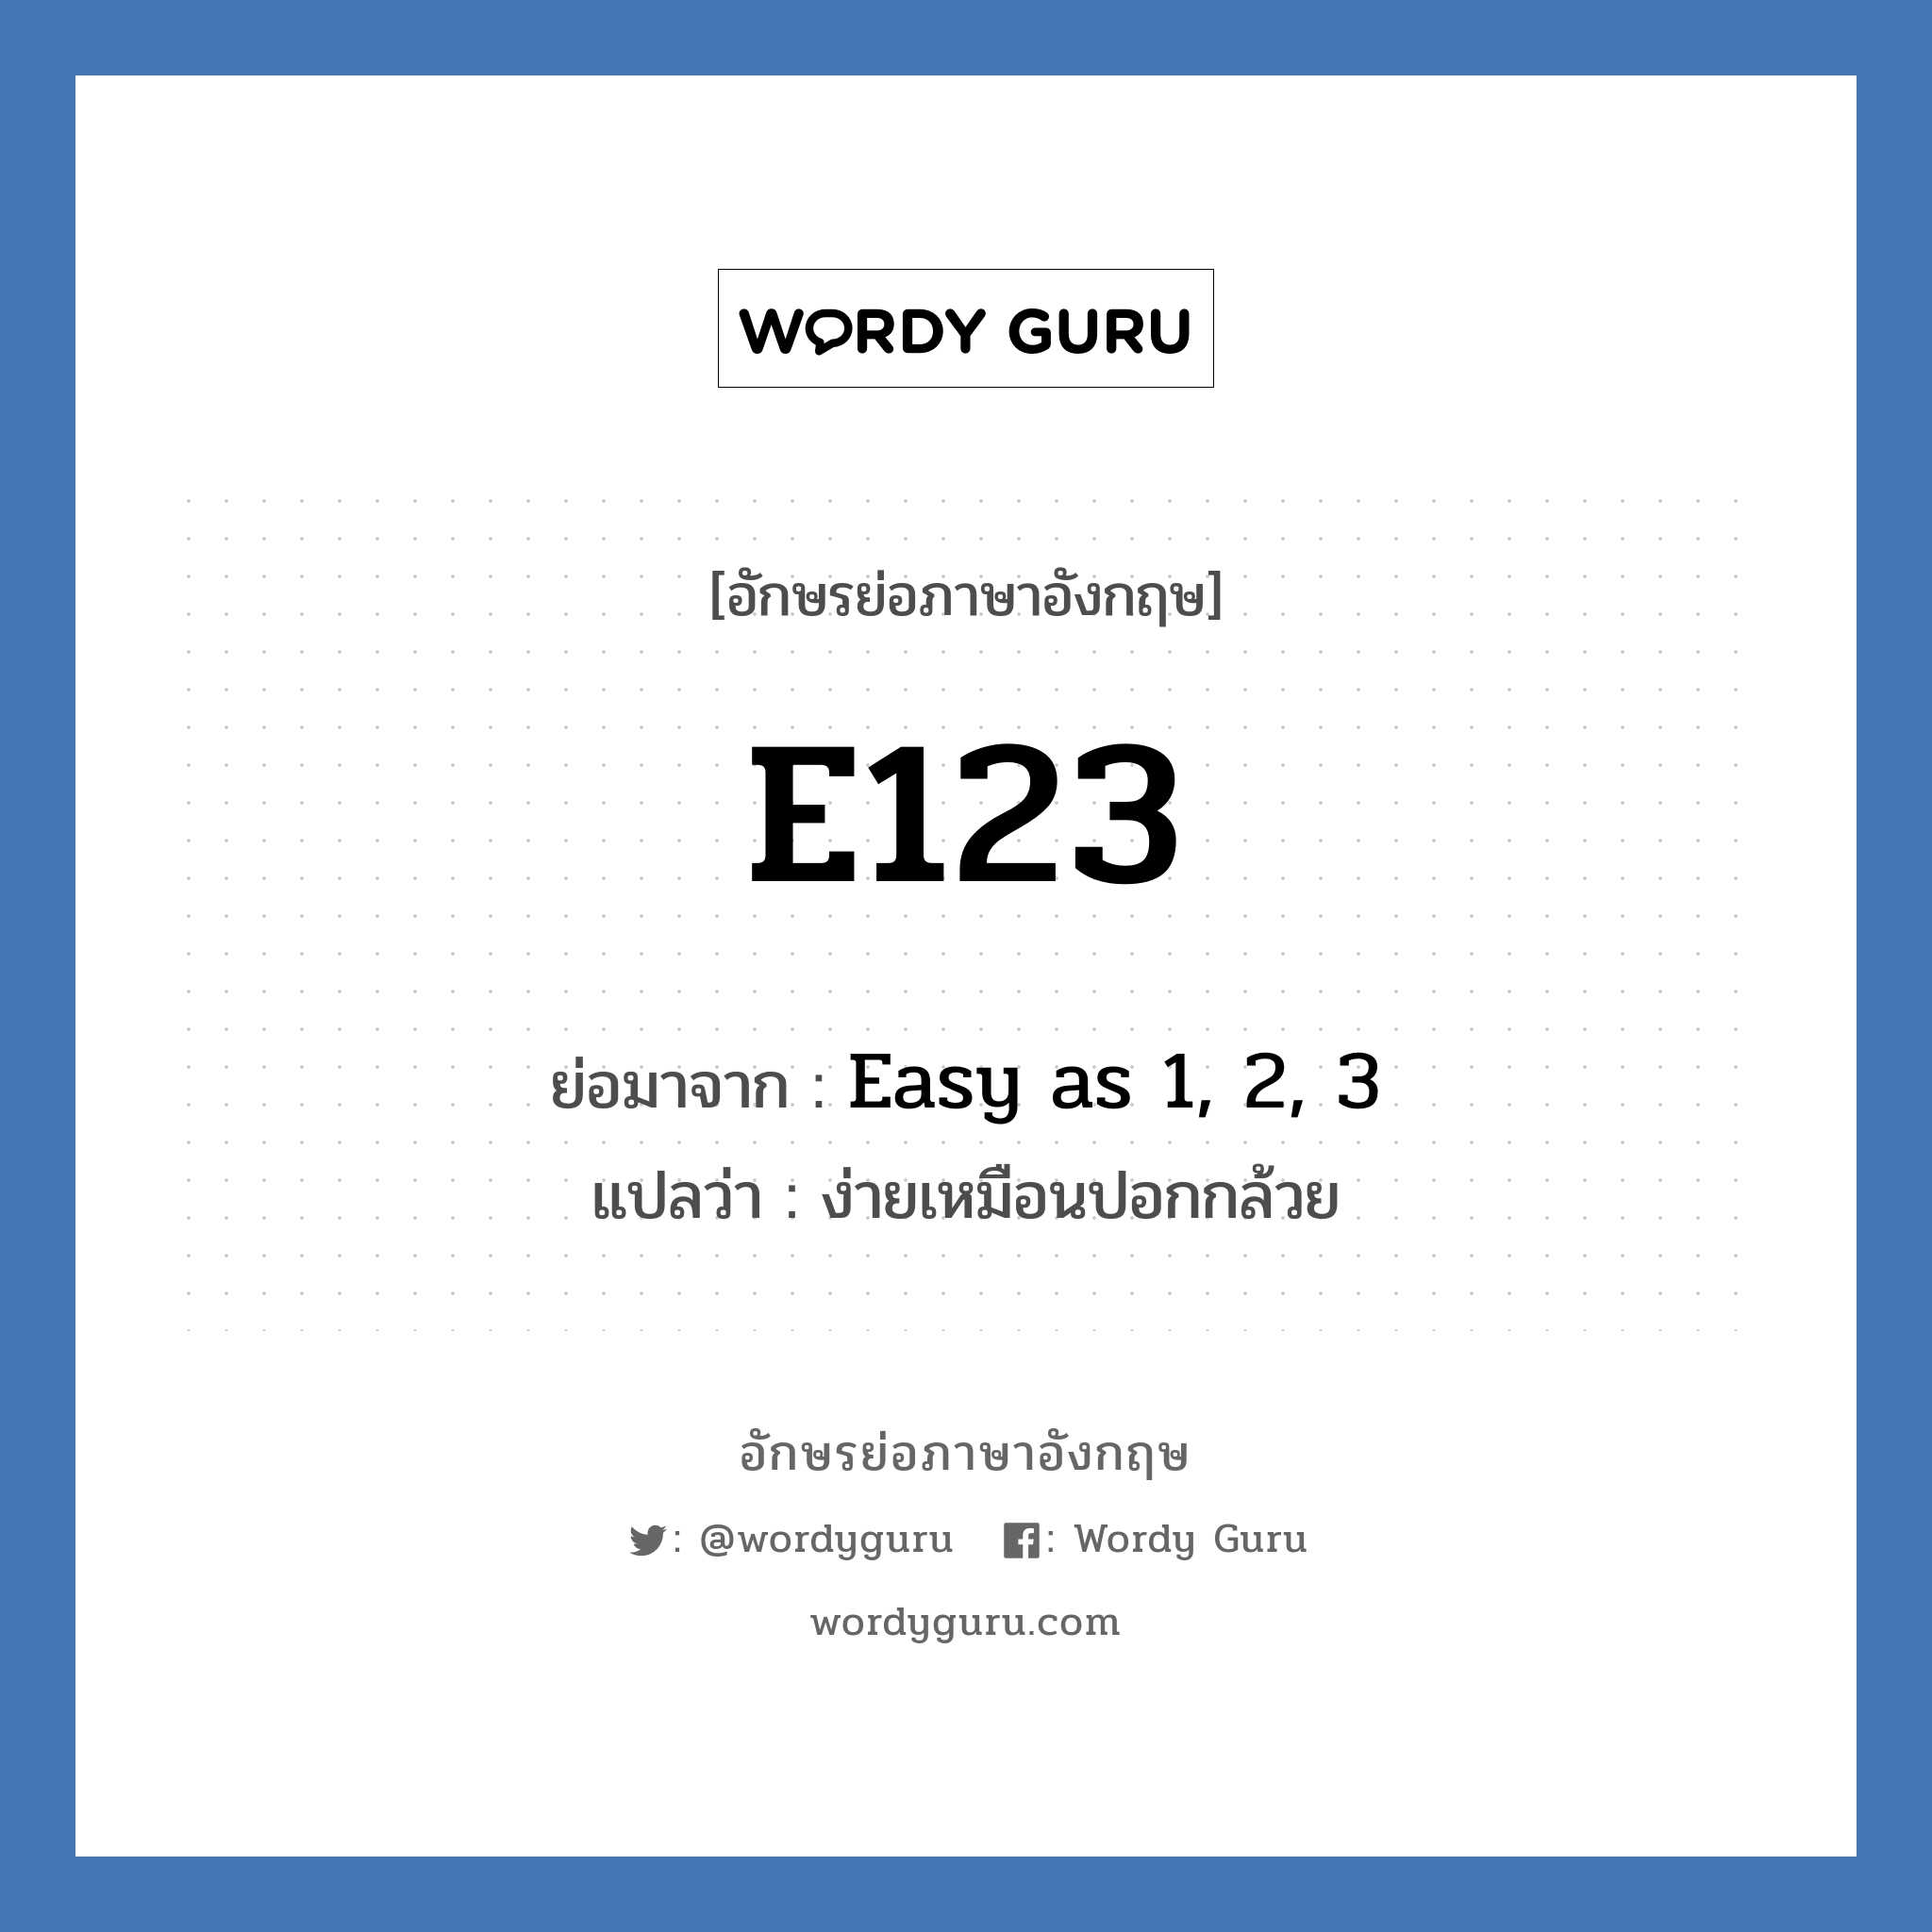 E123 ย่อมาจาก? แปลว่า?, อักษรย่อภาษาอังกฤษ E123 ย่อมาจาก Easy as 1, 2, 3 แปลว่า ง่ายเหมือนปอกกล้วย